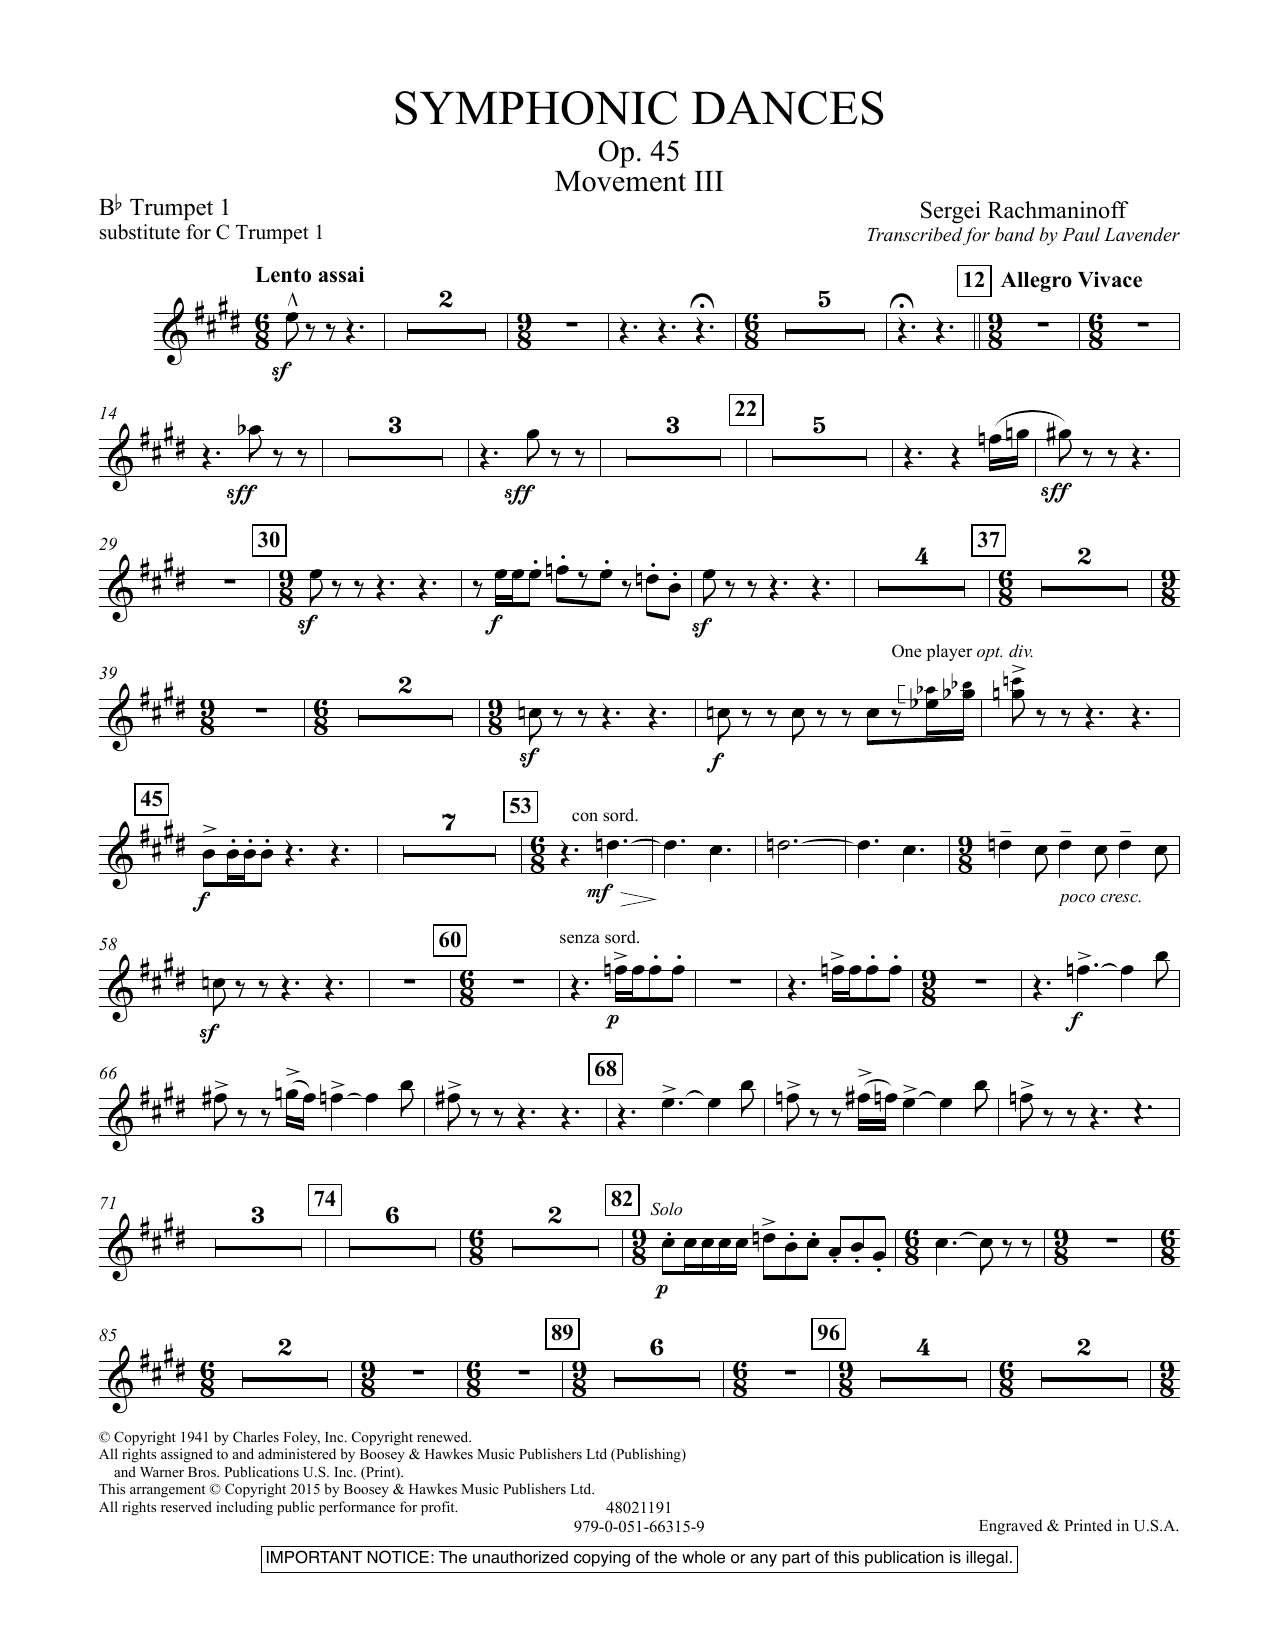 Paul Lavender Symphonic Dances, Op.45 - Bb Trumpet Parts - Digital Only - Bb Trumpet 1 (sub. C Tpt. 1) Sheet Music Notes & Chords for Concert Band - Download or Print PDF